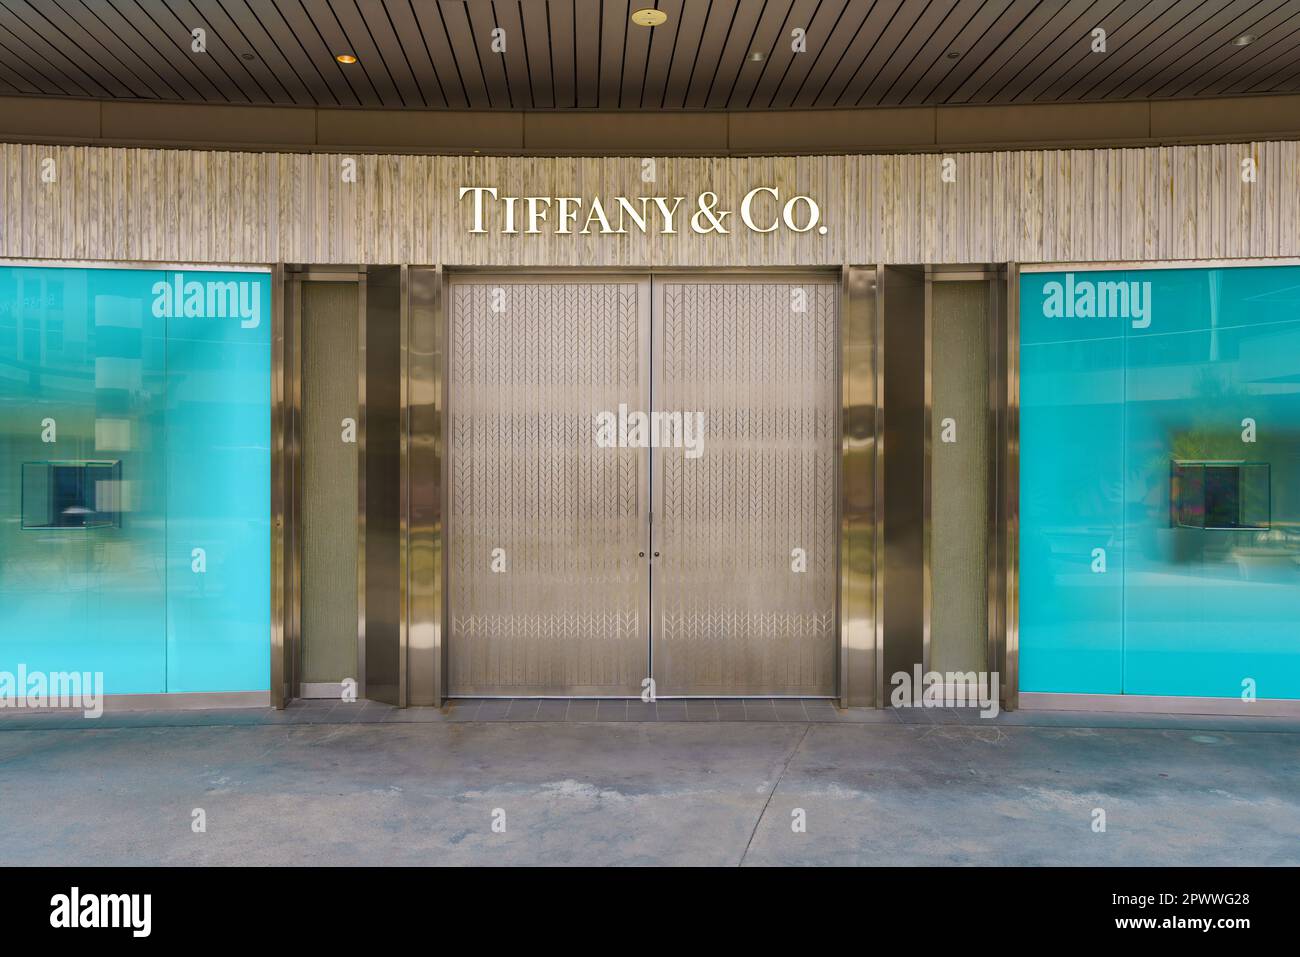 Tiffany and Company at Santa Monica Place, shopping mall in Santa Monica, Los Angeles, California. Tiffany's is a luxury jewelry design house. Stock Photo